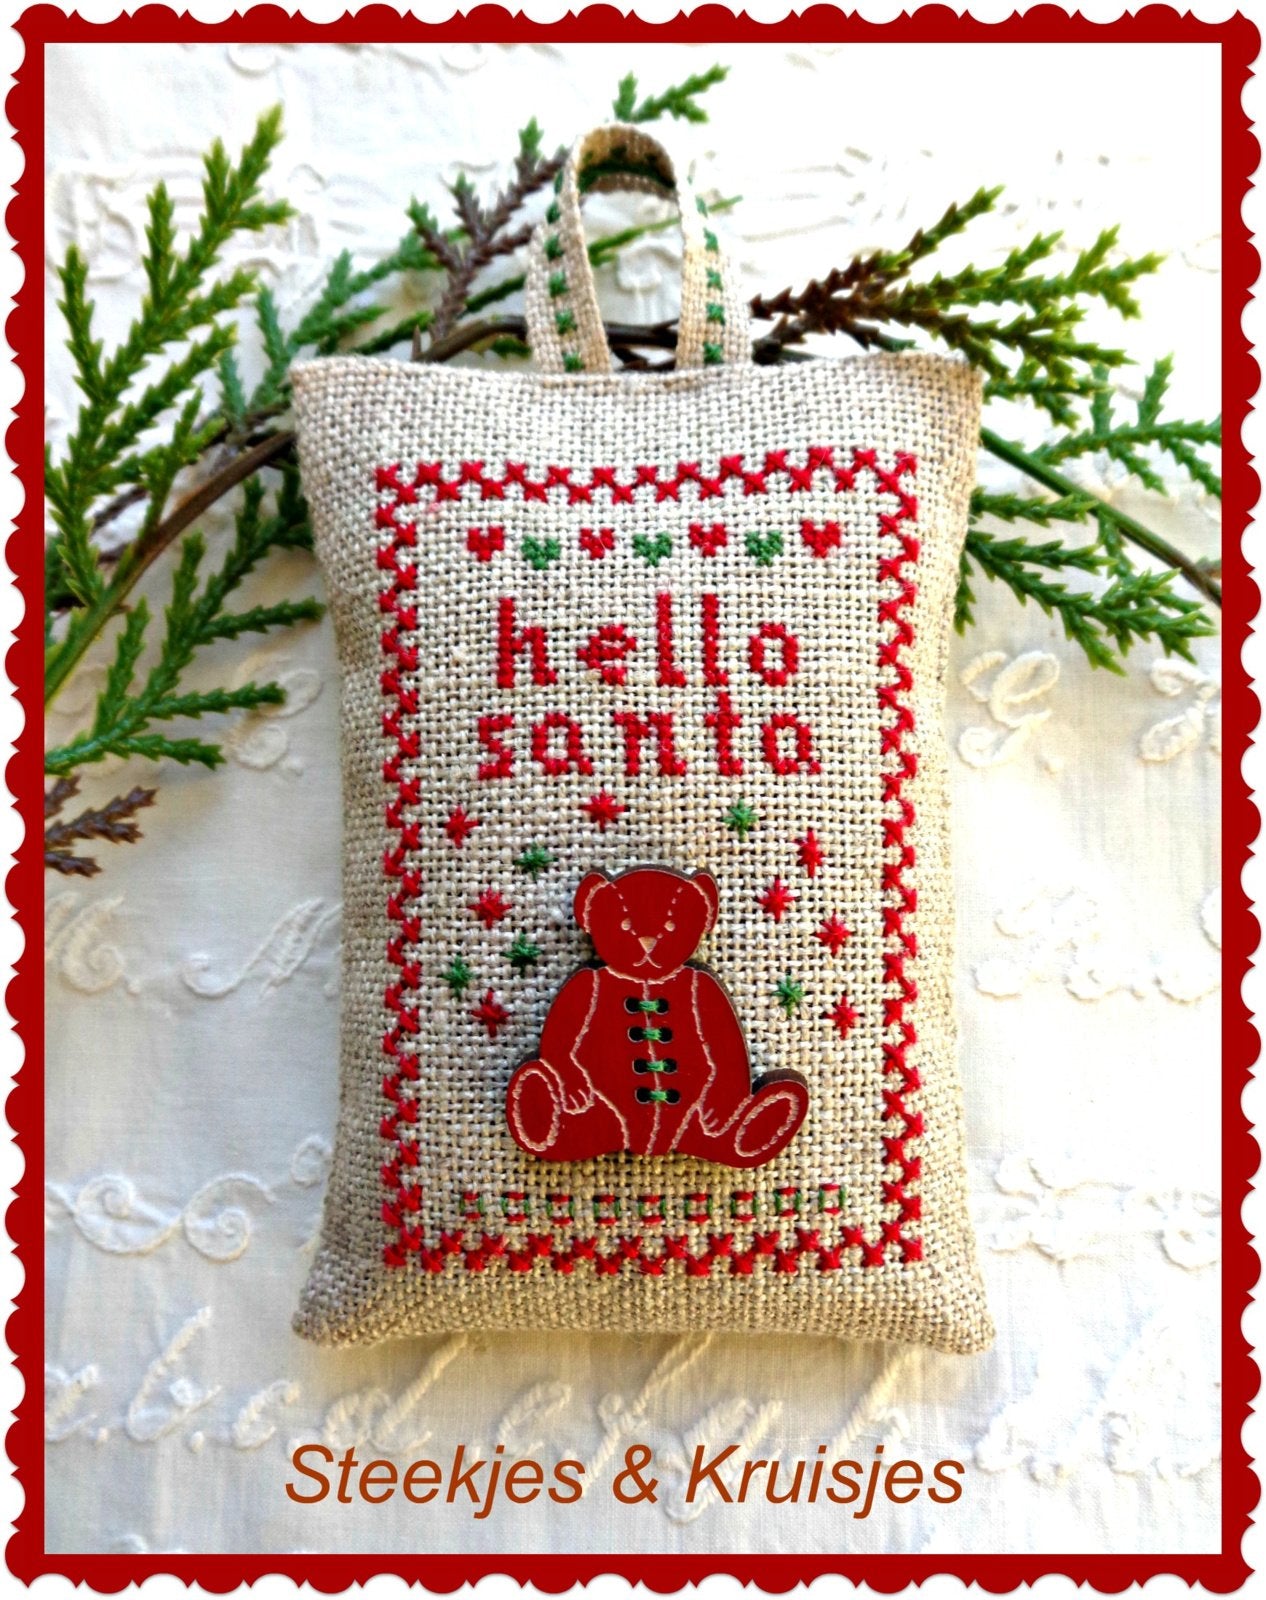 S & K "Hello Santa" Cross Stitch Kit